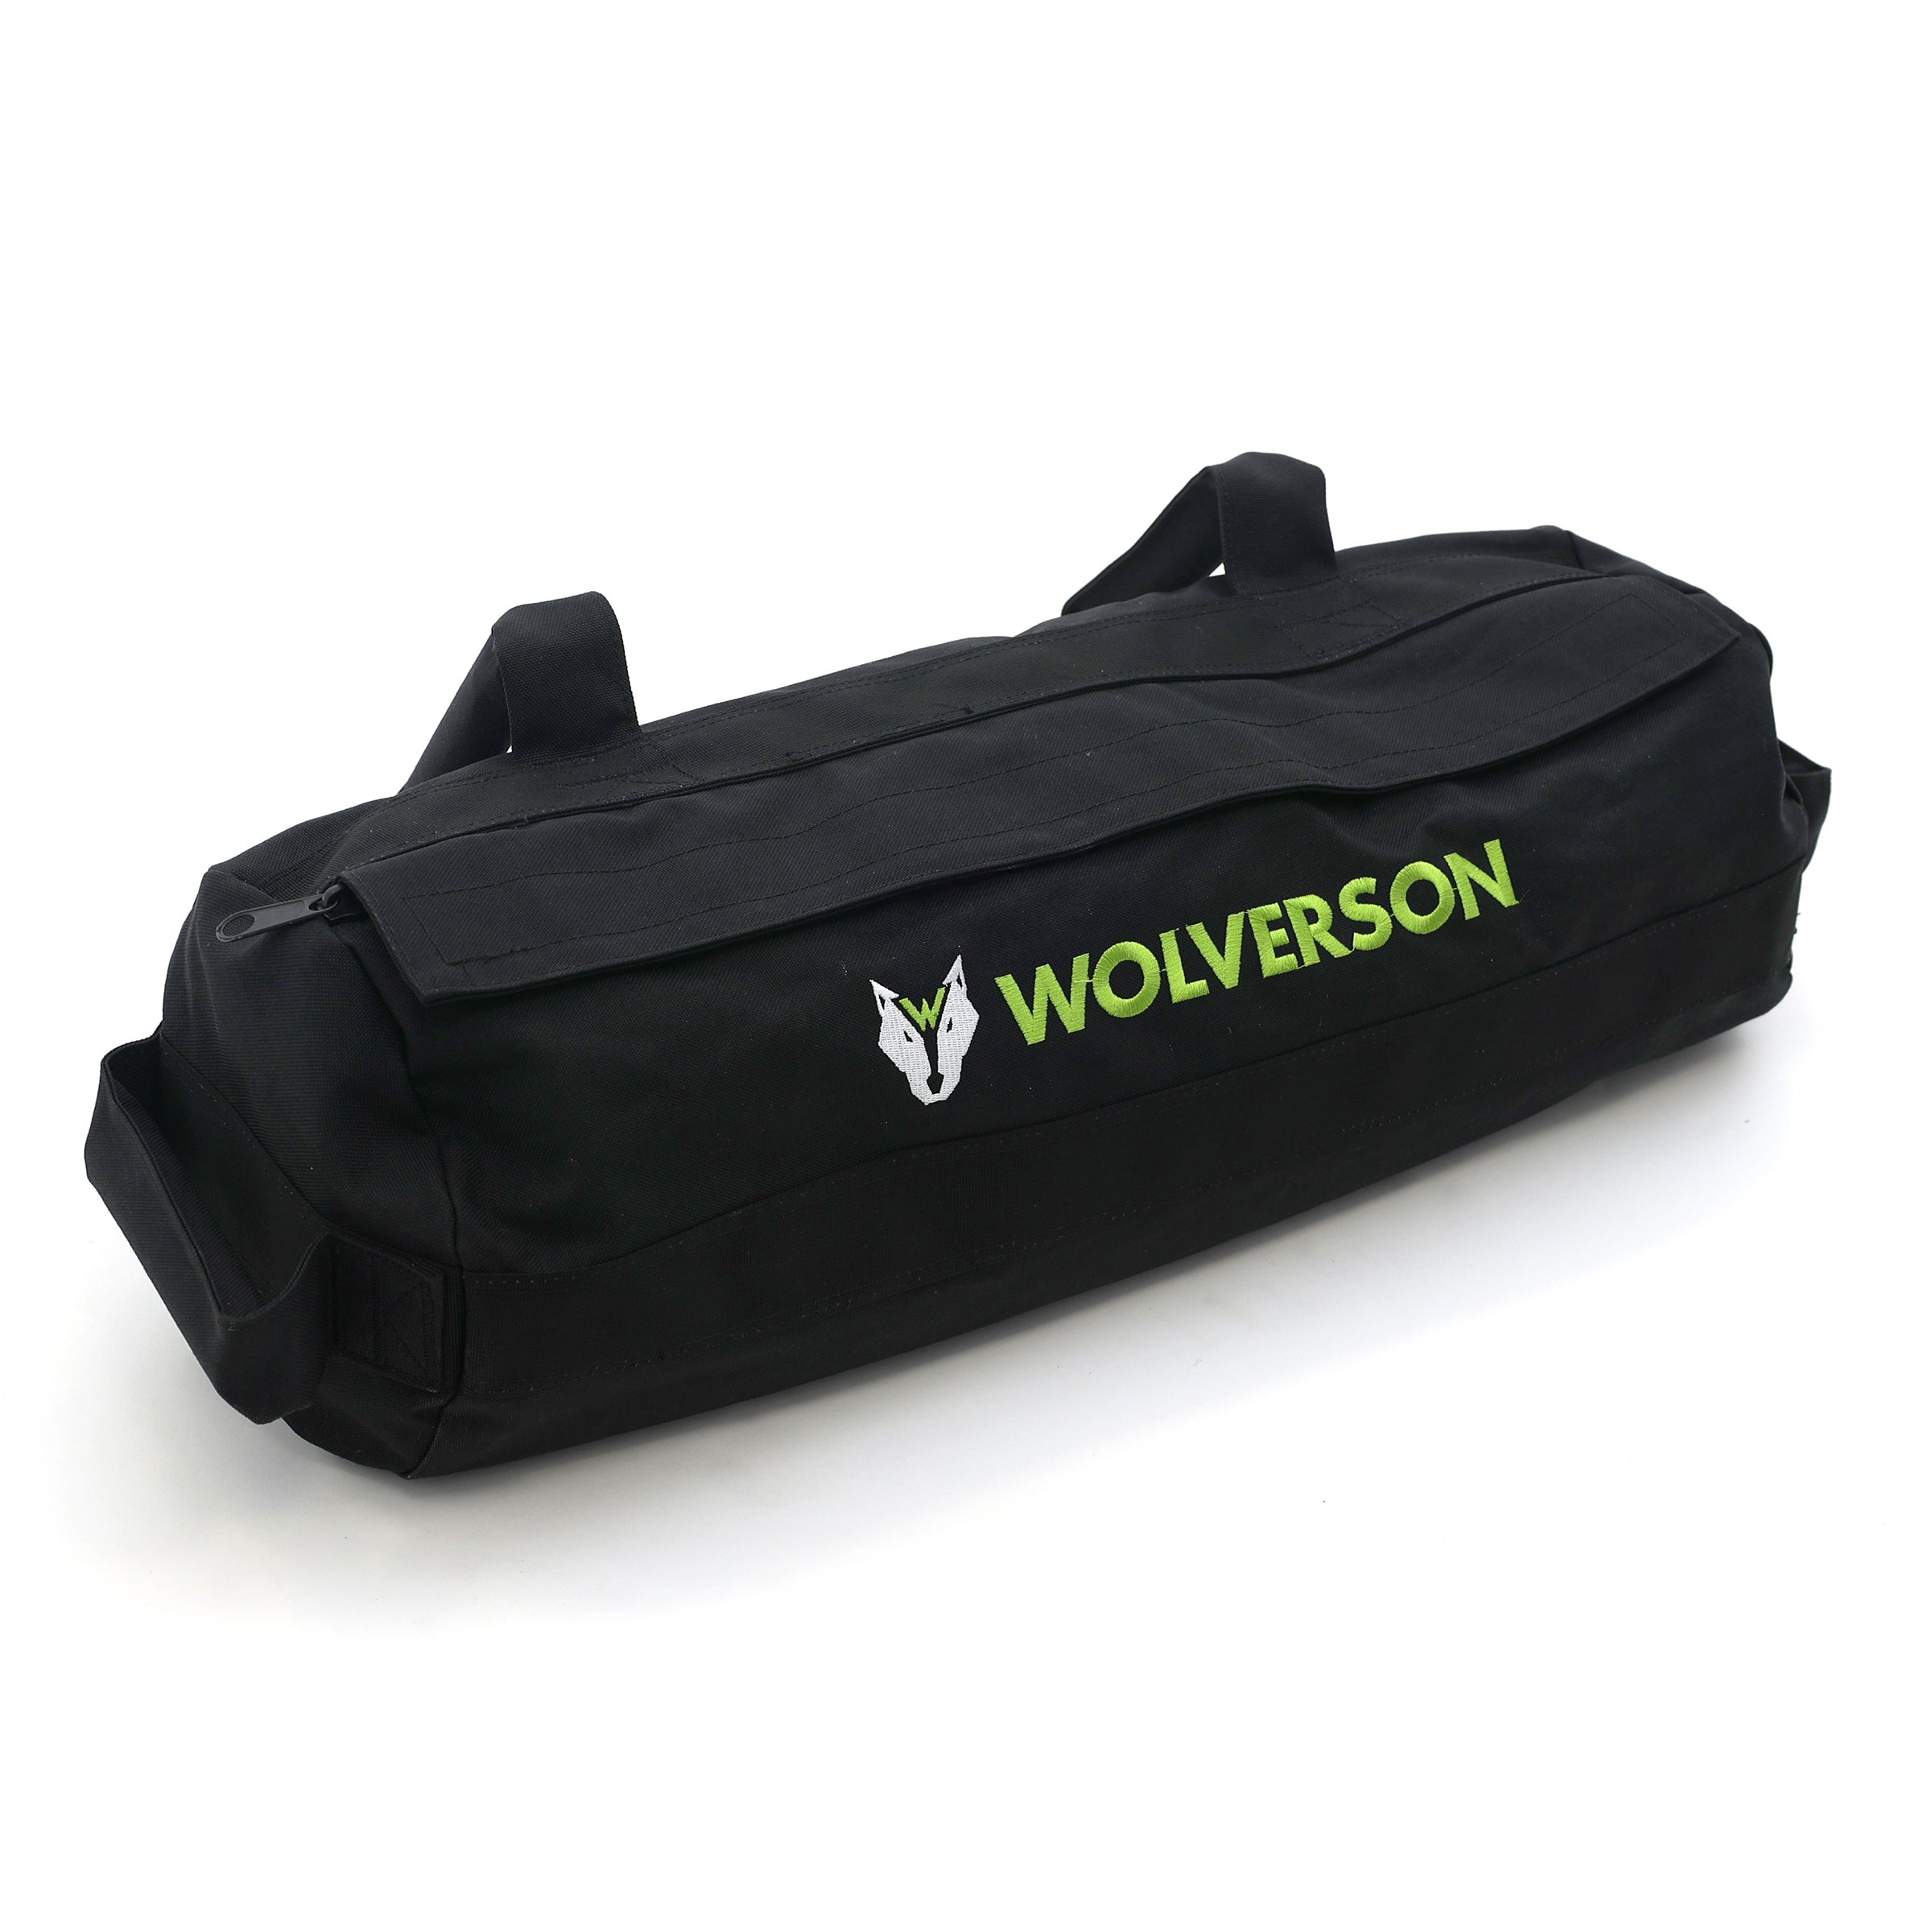 Wolverson HYROX Sandbags